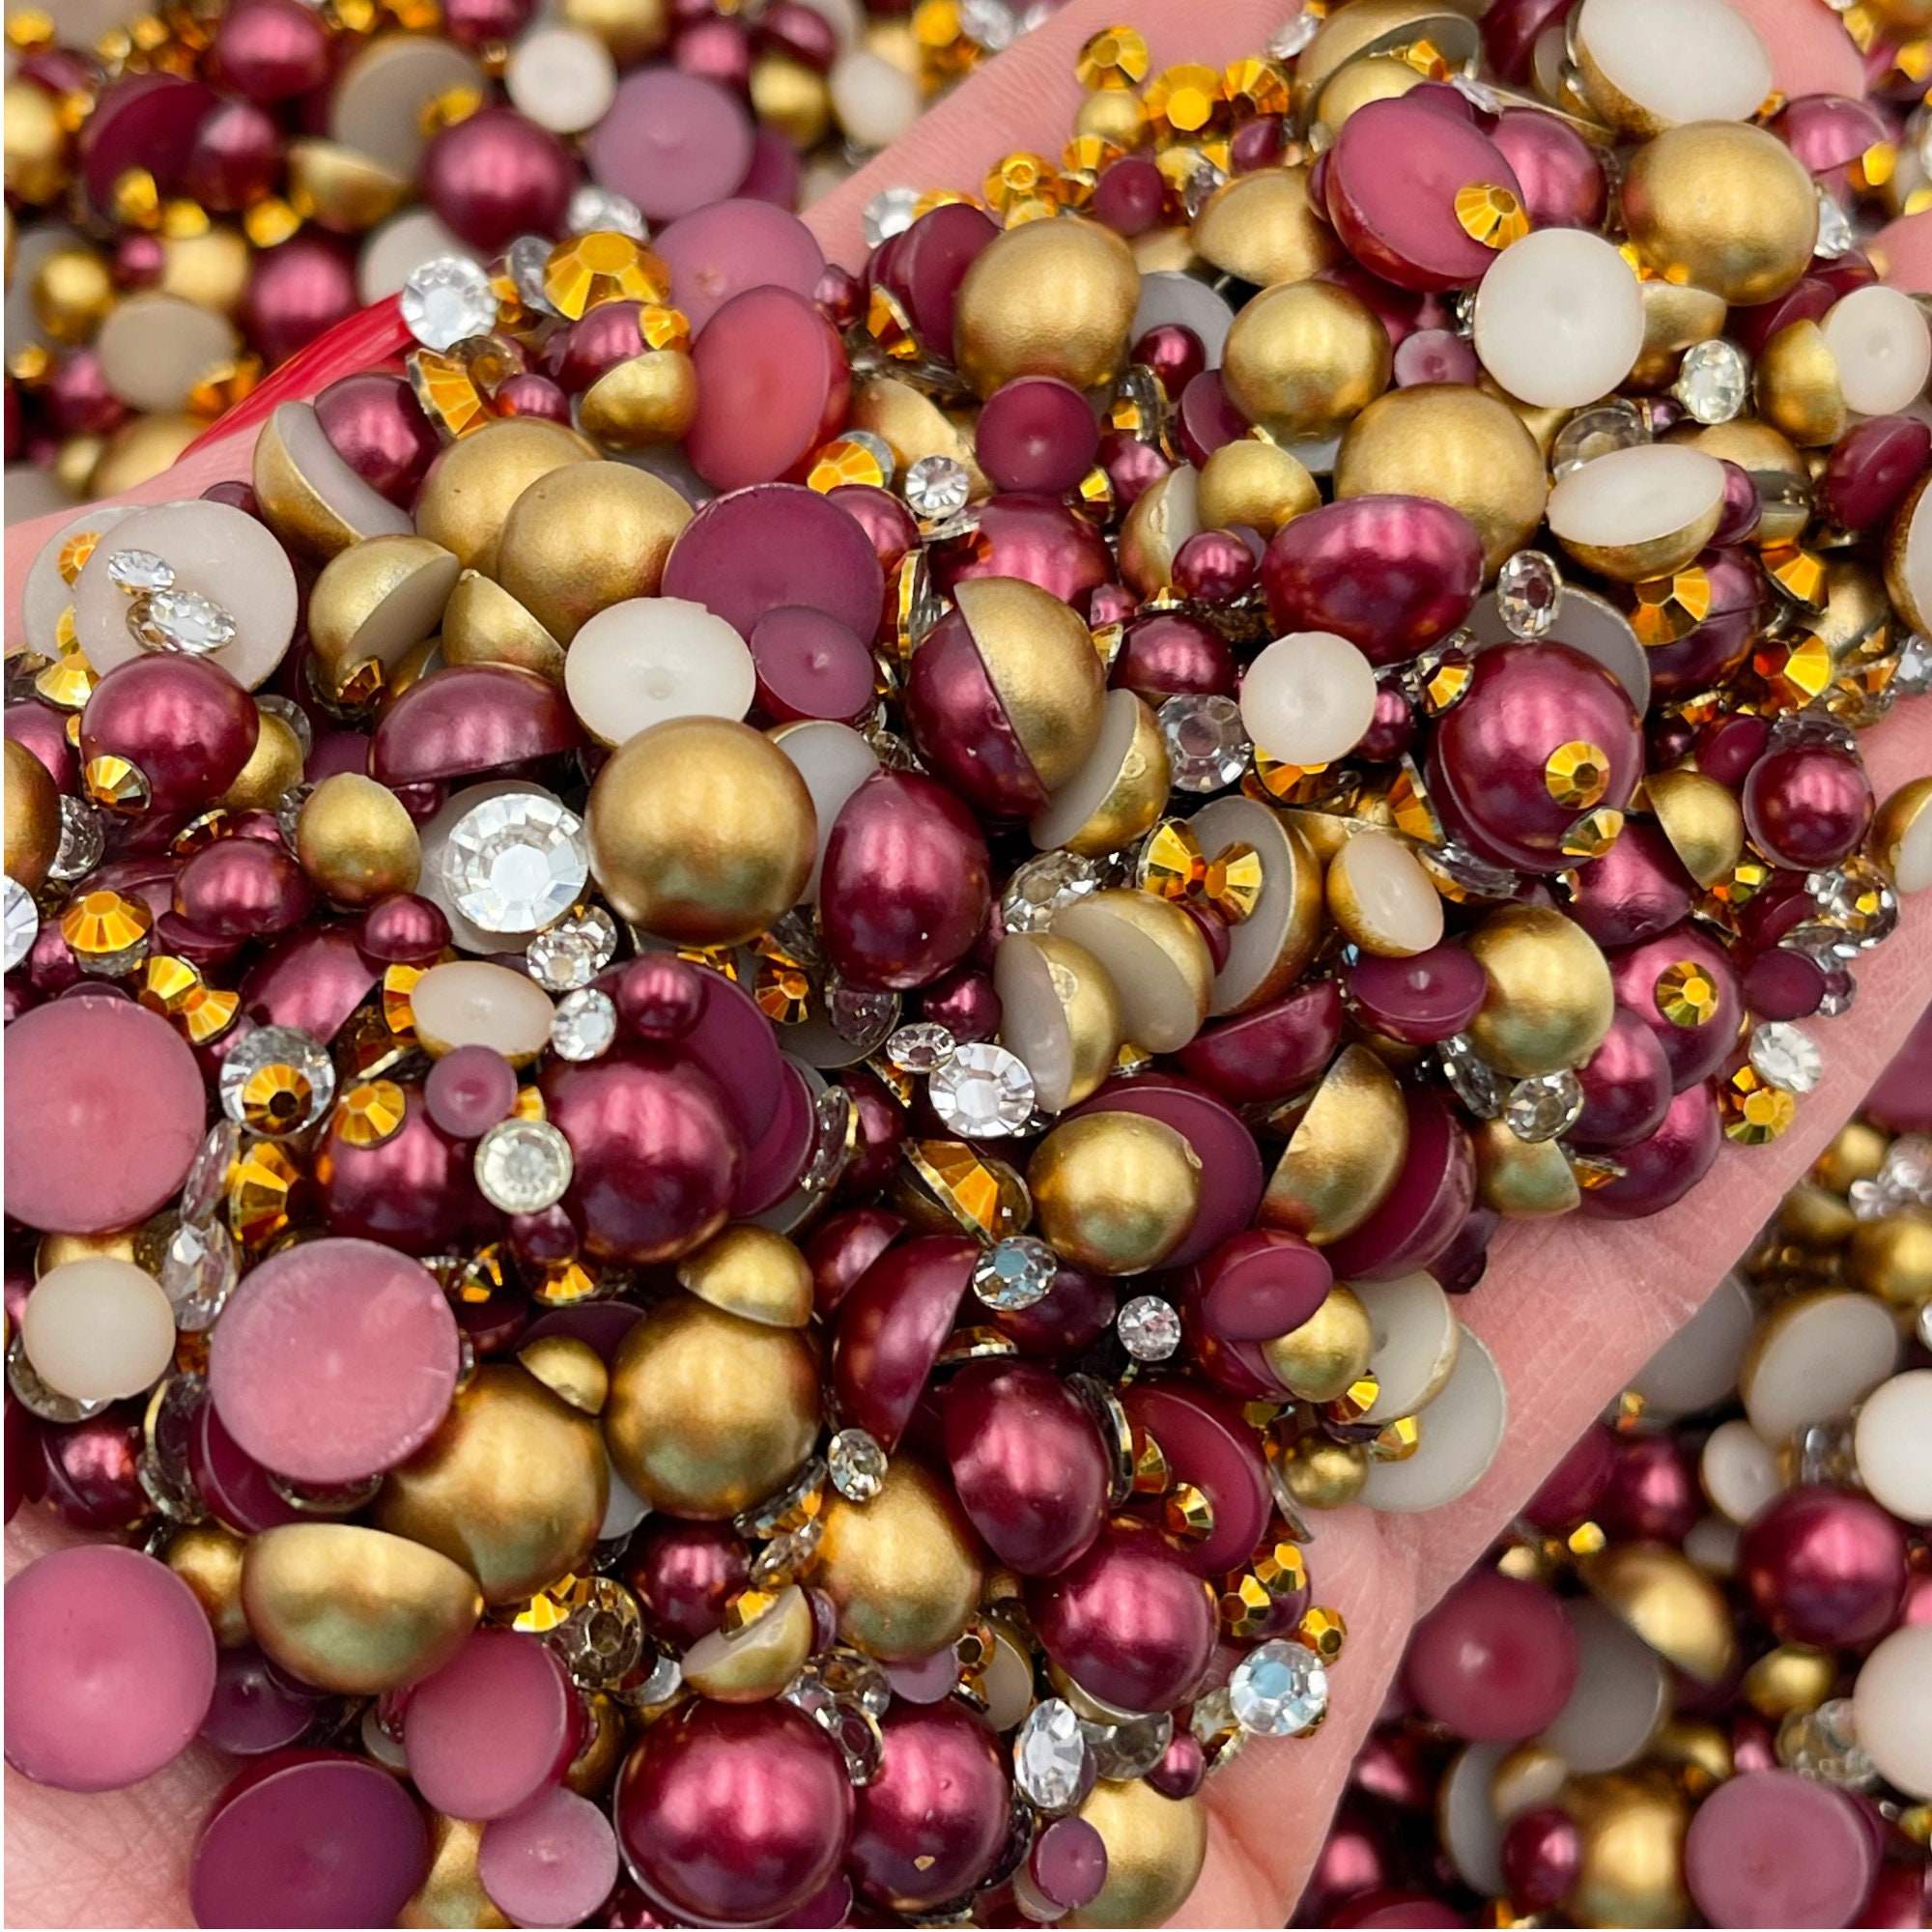 Niziky 1500pcs Flat Back Half Round Pearls, 4mm Gold Half Flatback Pearls Gems Beads for Crafts, Flat Back Half Pearls for Craft